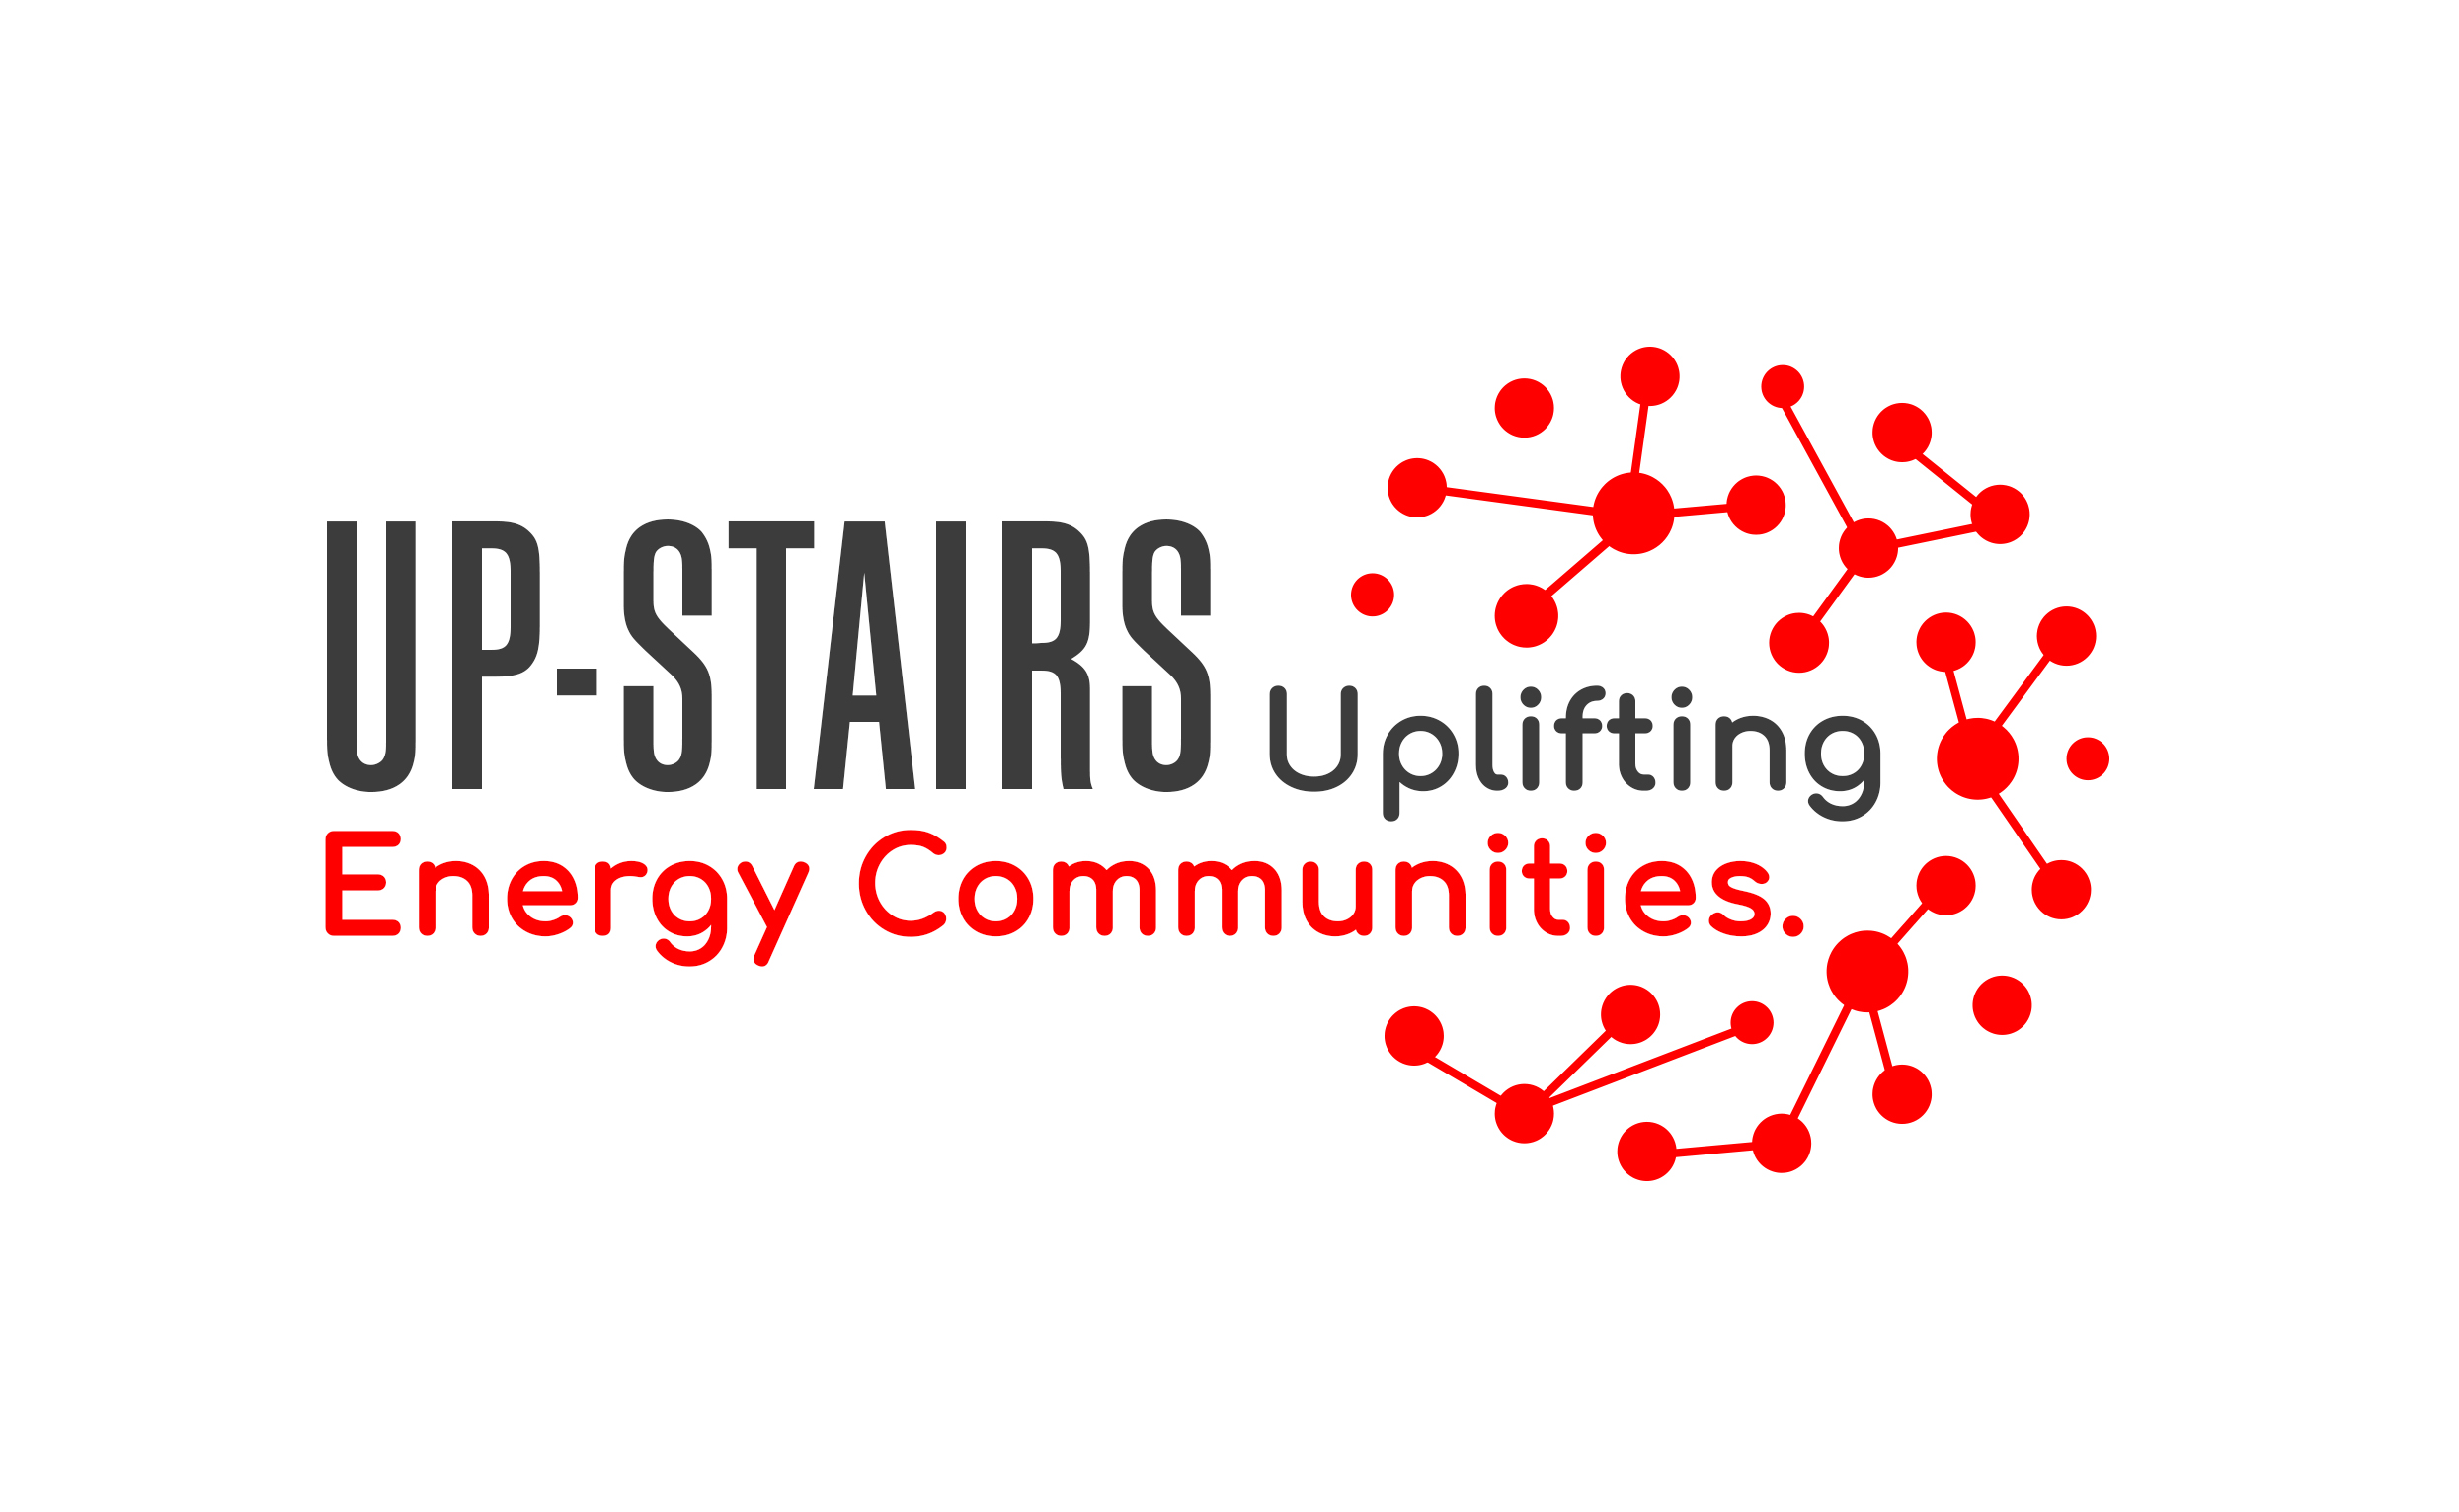 UP-STAIRS: Uplifting Energy Communities